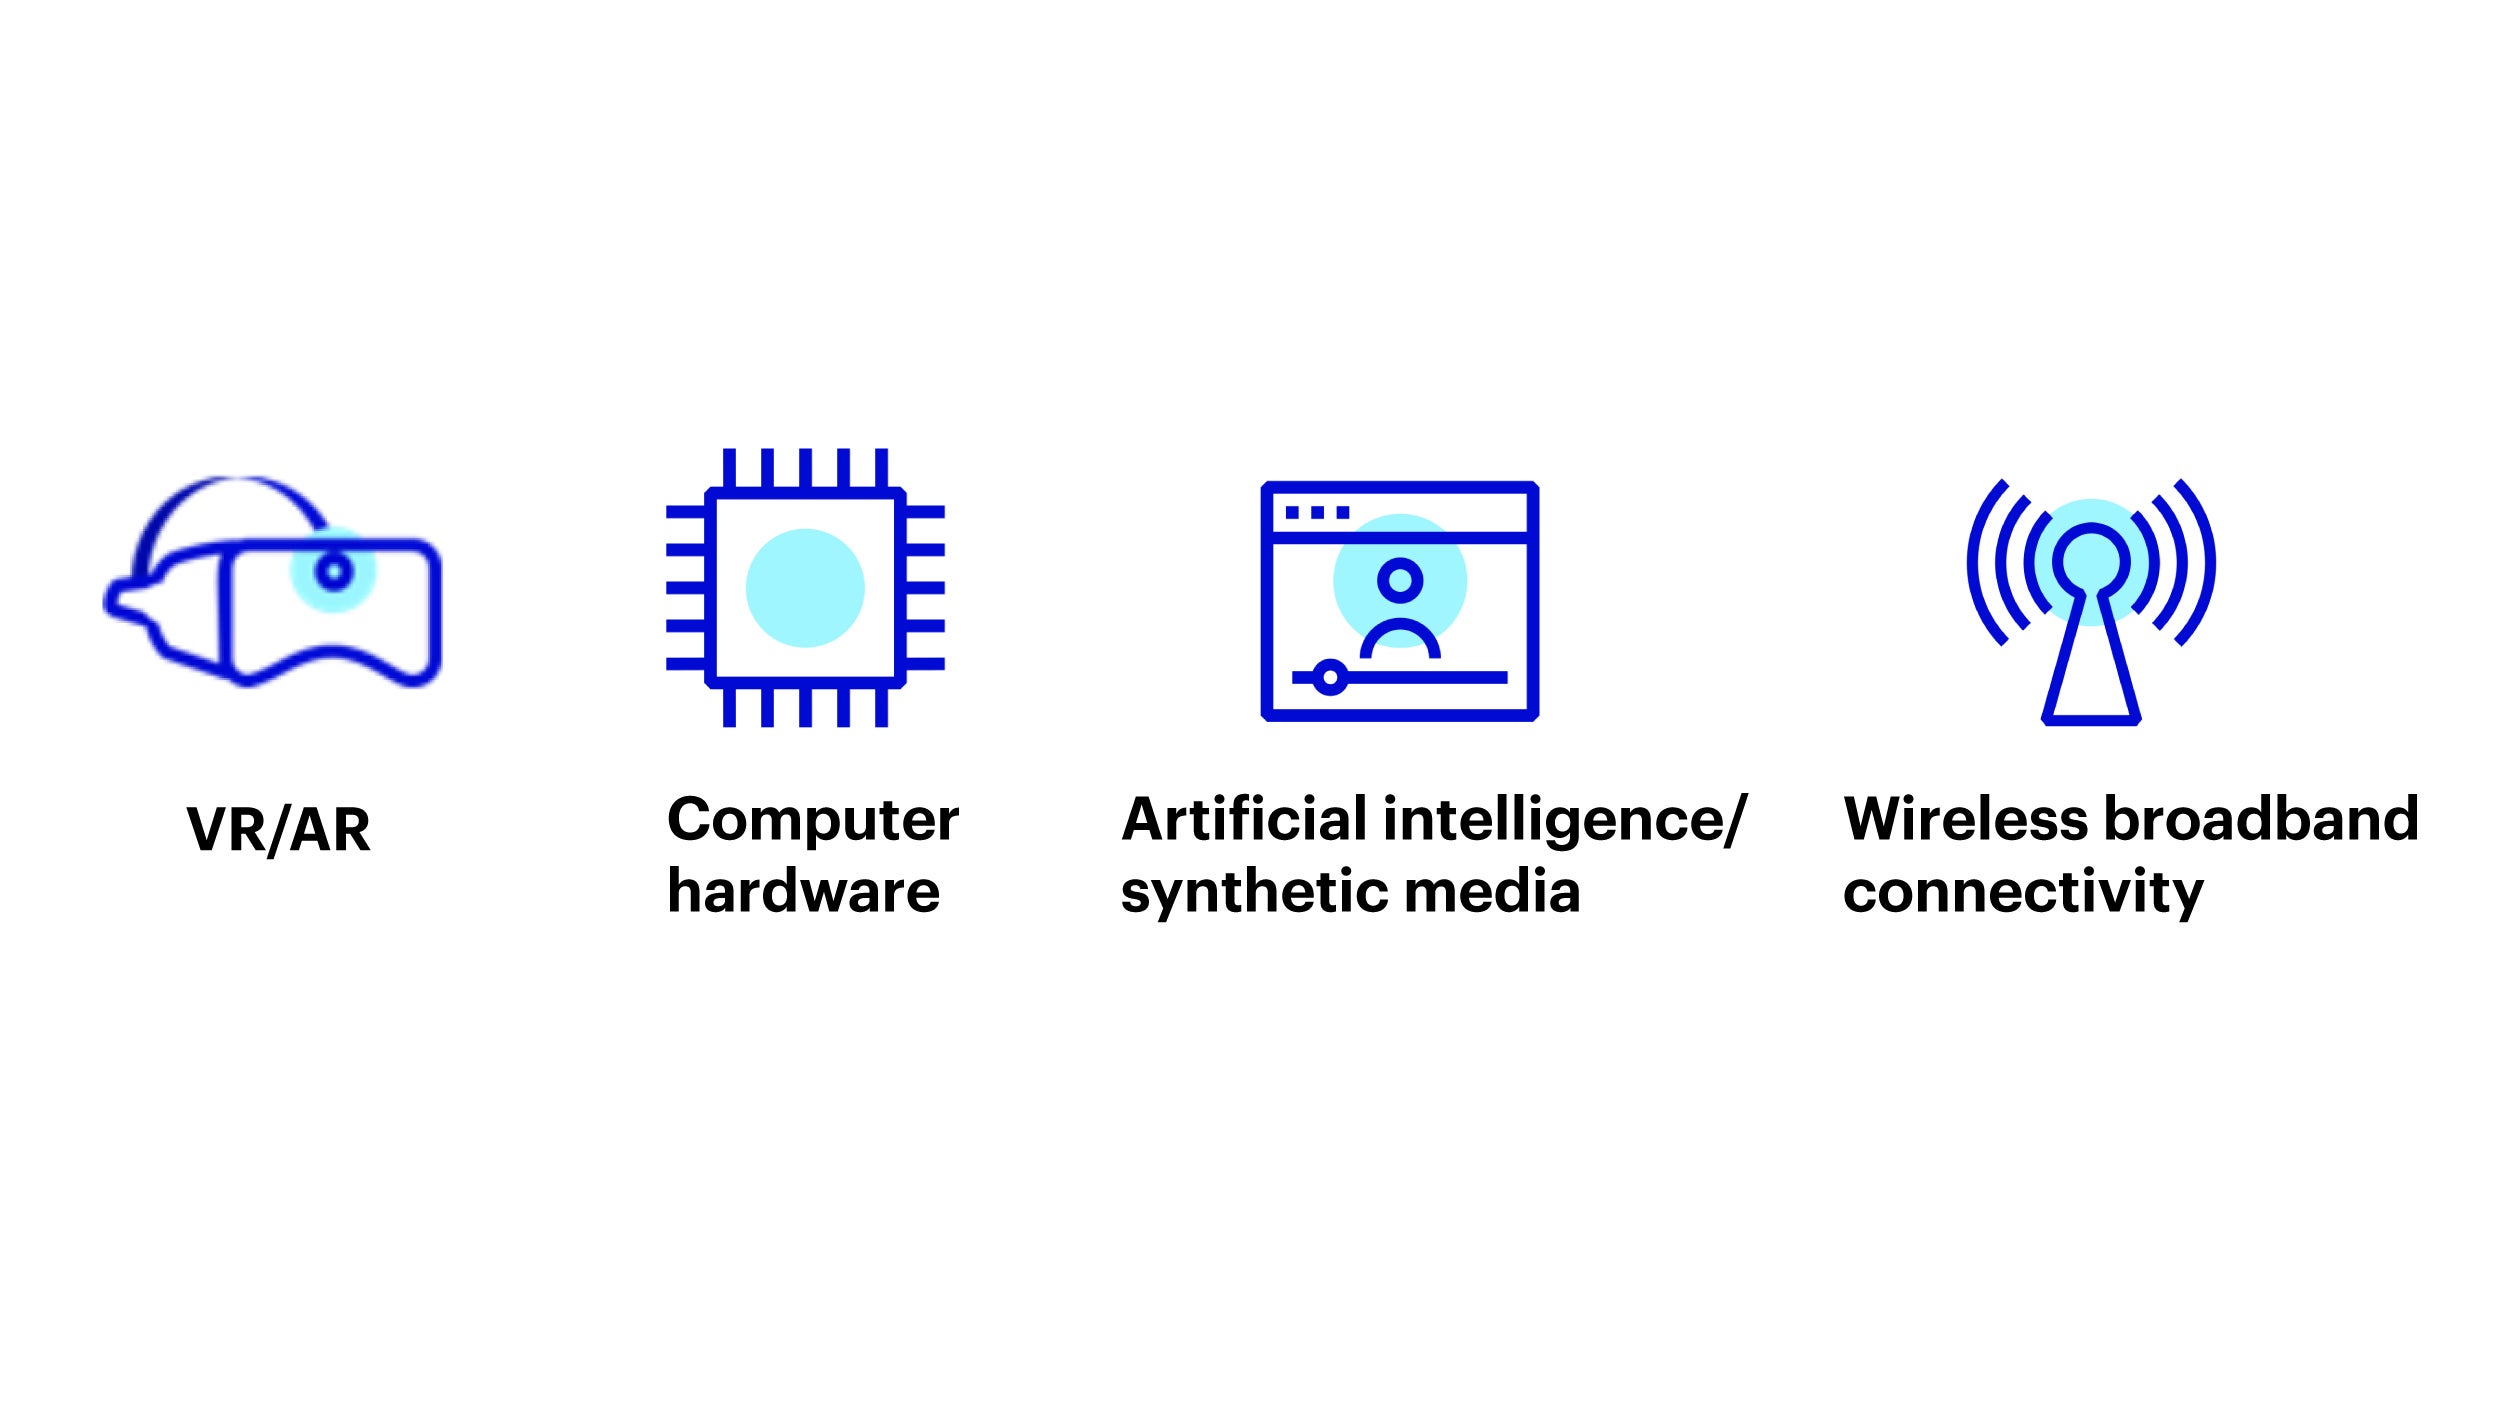 Four key enabling technologies